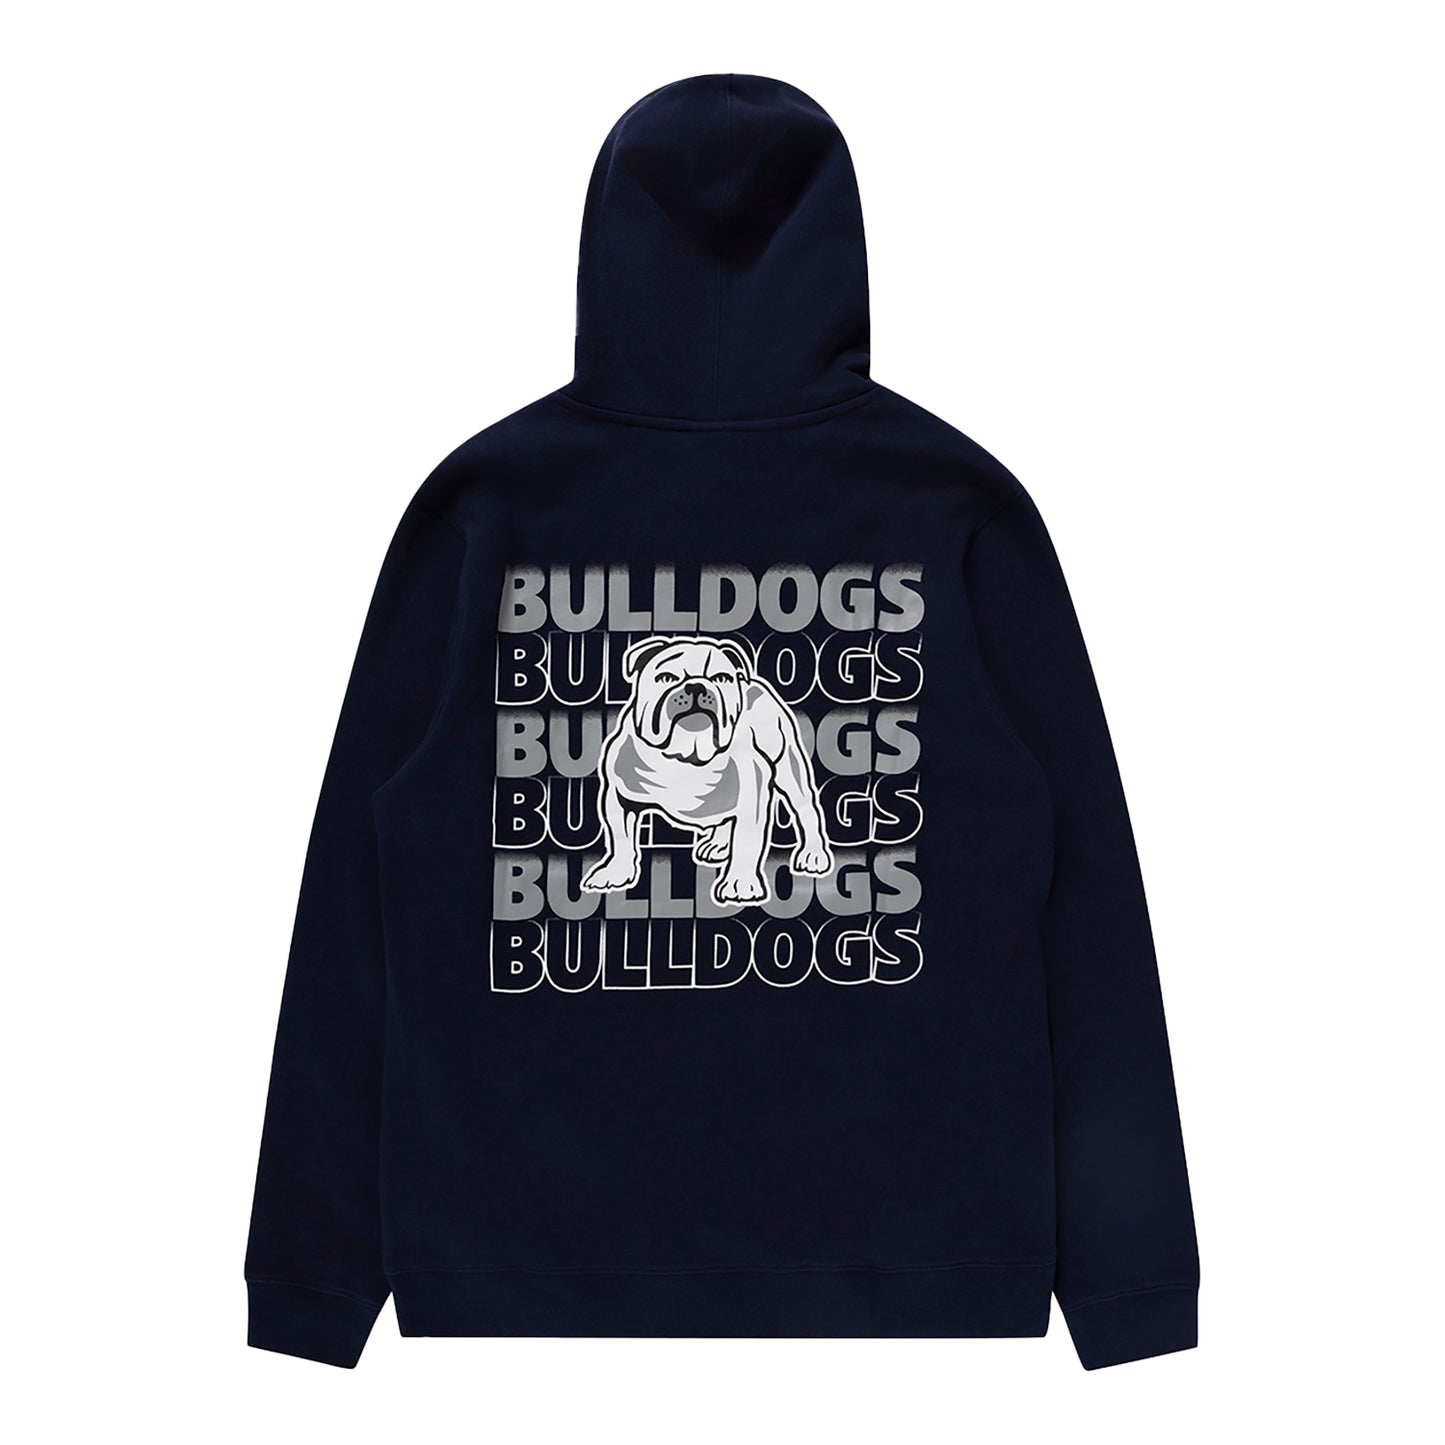 Canterbury-Bankstown Bulldogs Mens Supporter Hoodie